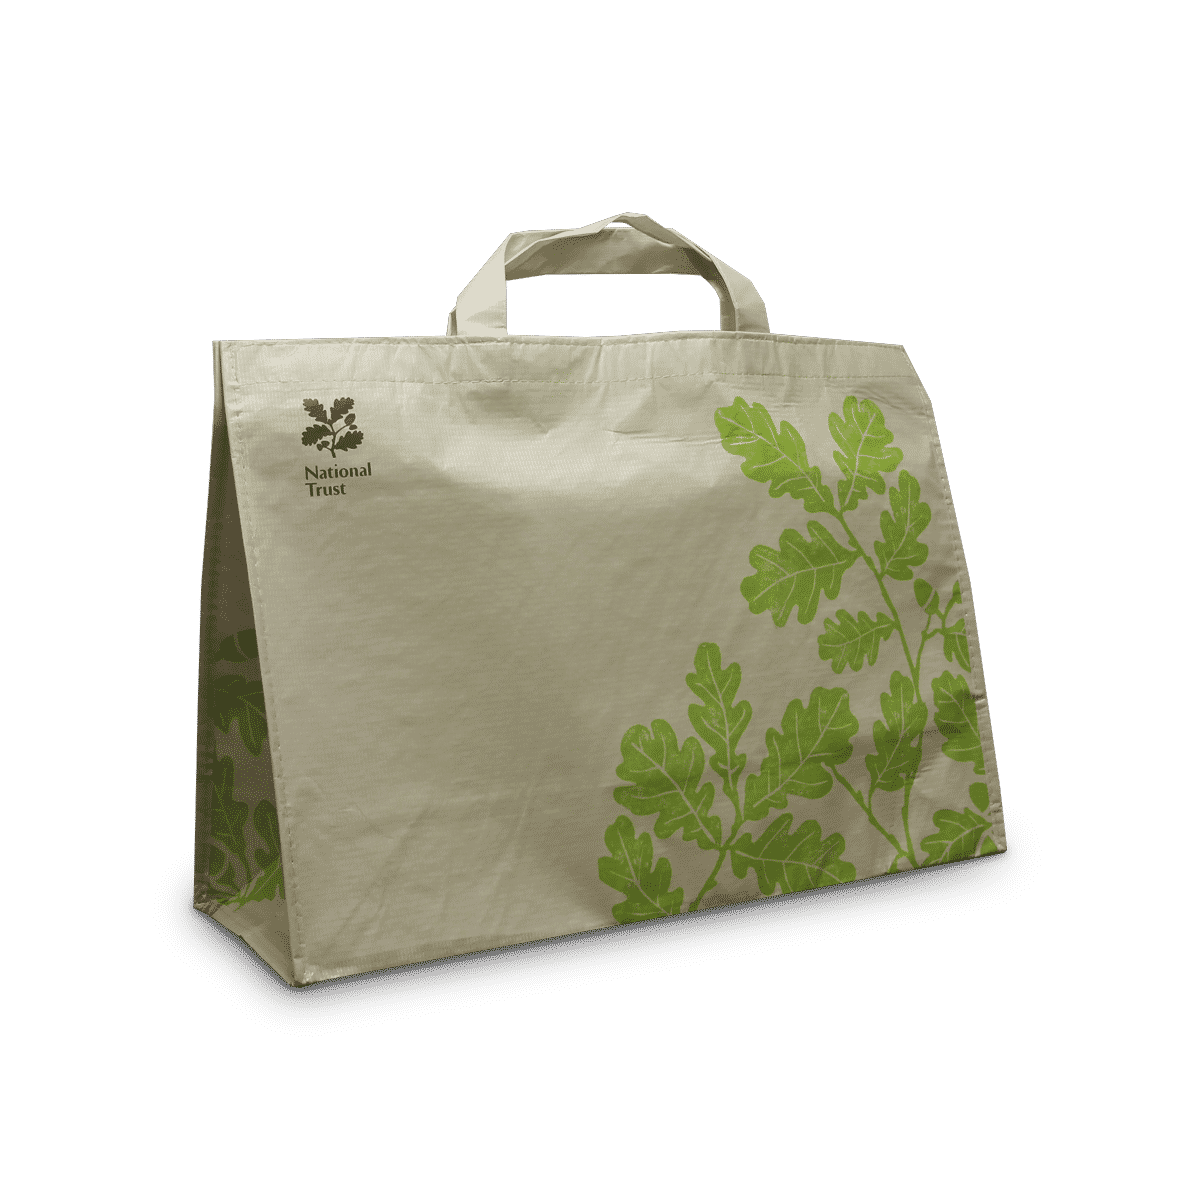 RPET plastic reusable bag - National Trust